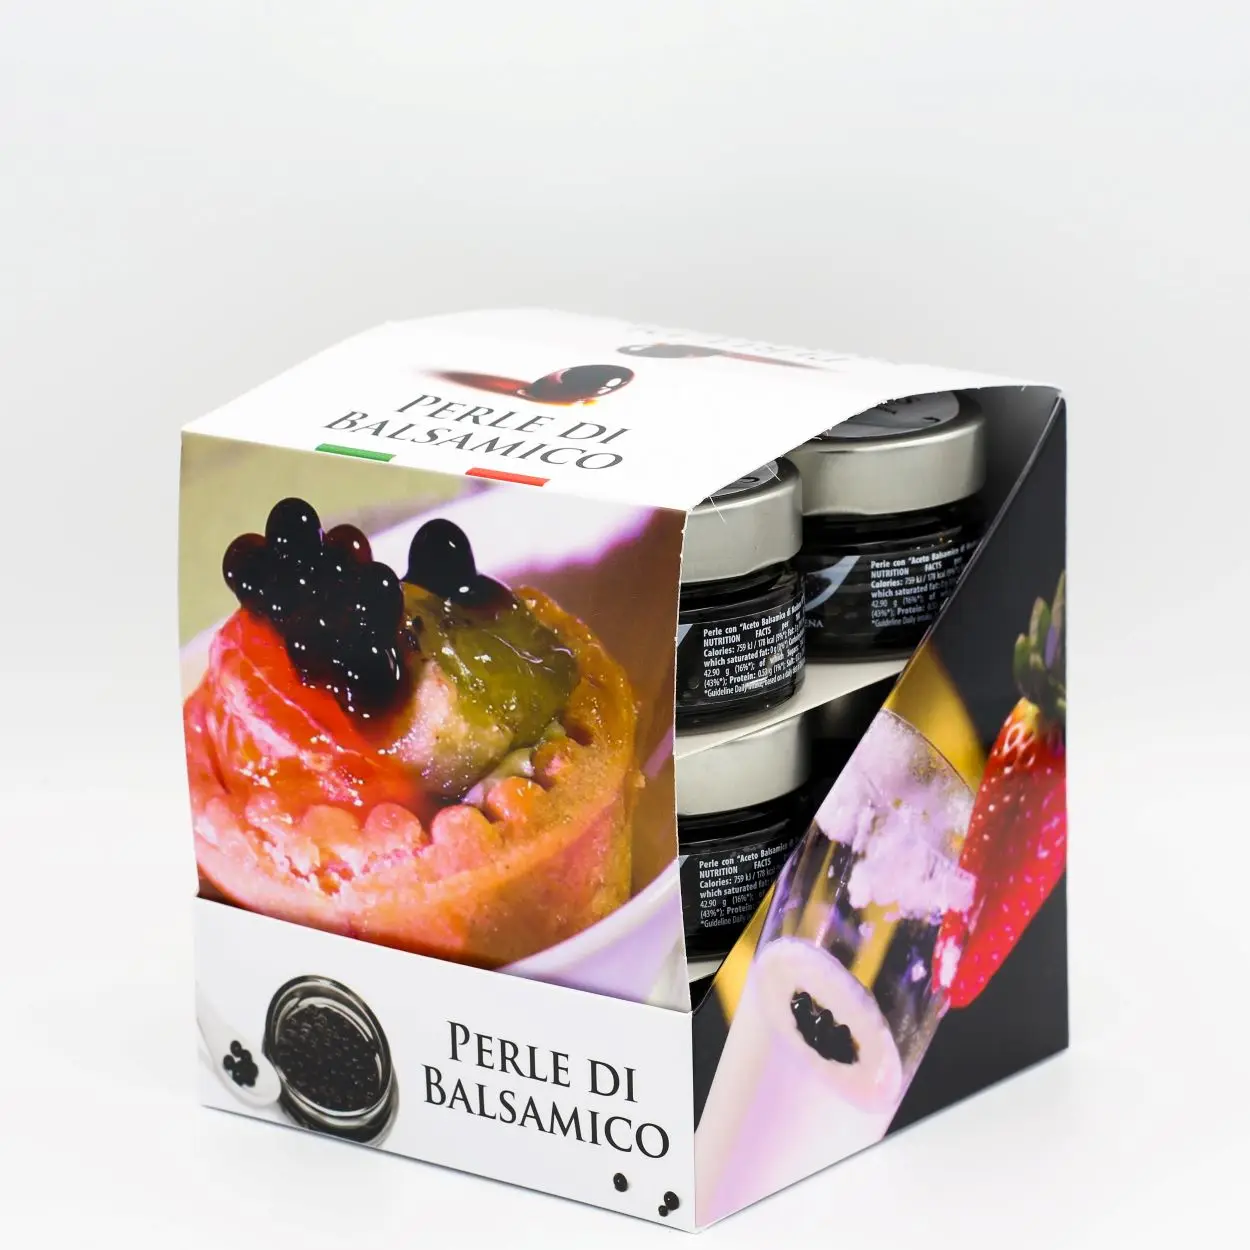 Italian Gourmet Premium Quality Top Seller Pearls with Balsamic Vinegar of Modena 50 g